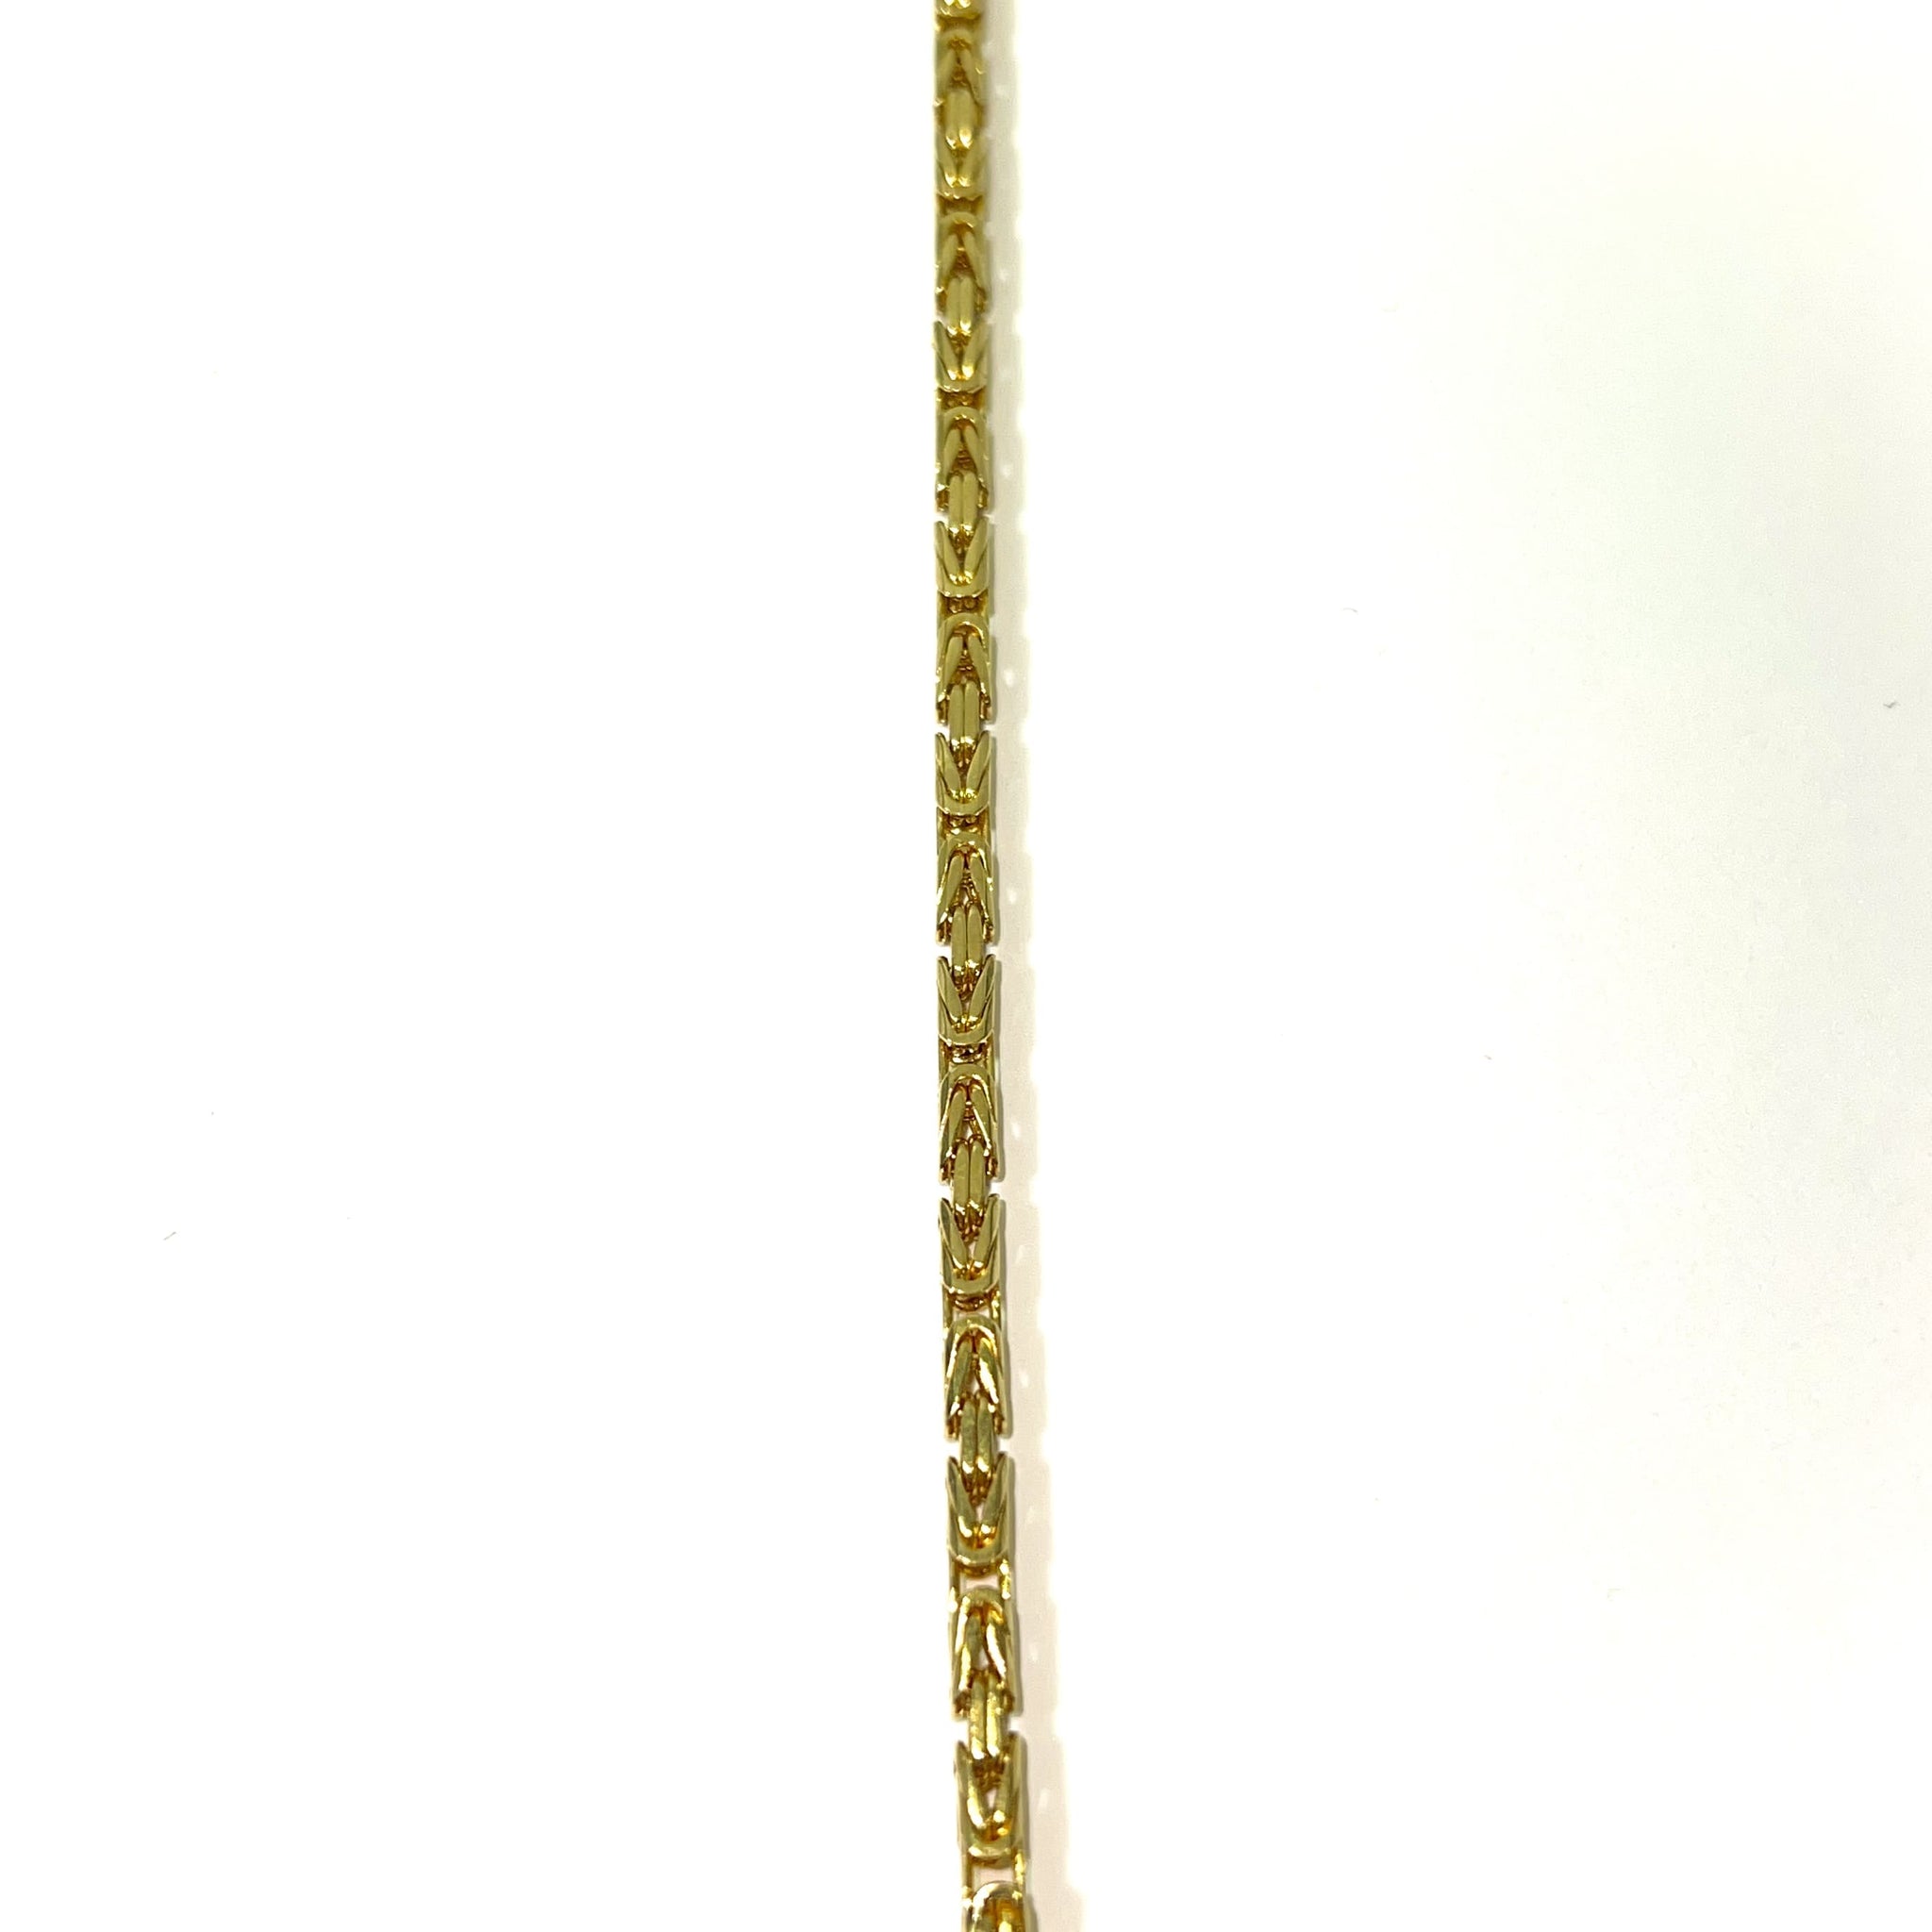 Kingschain Bracelet - 14 Carat Gold - 20cm / 3mm - 298